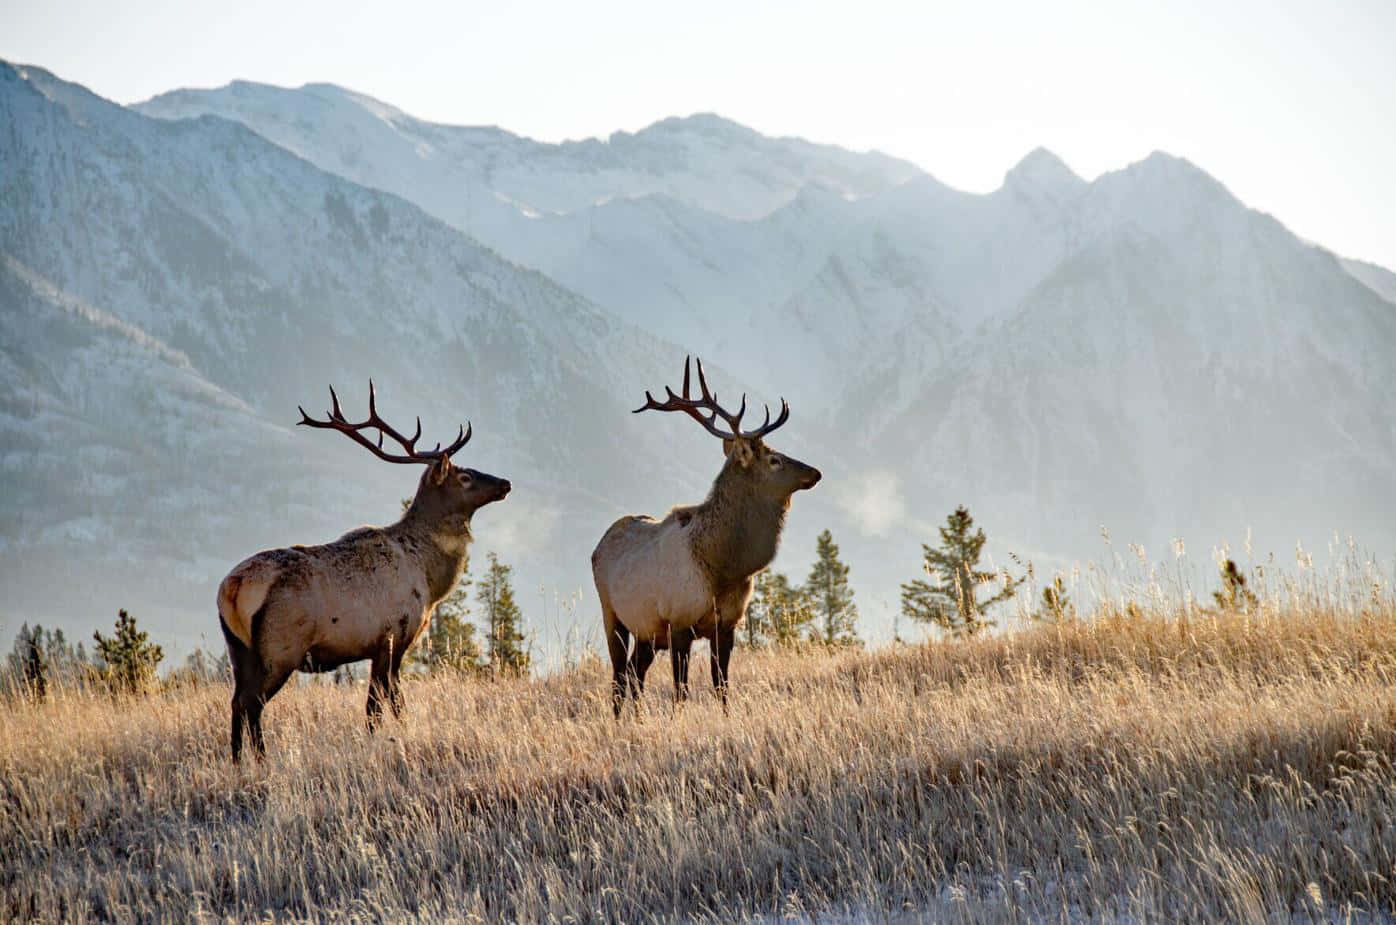 The Majestic Elk in its Natural Habitat